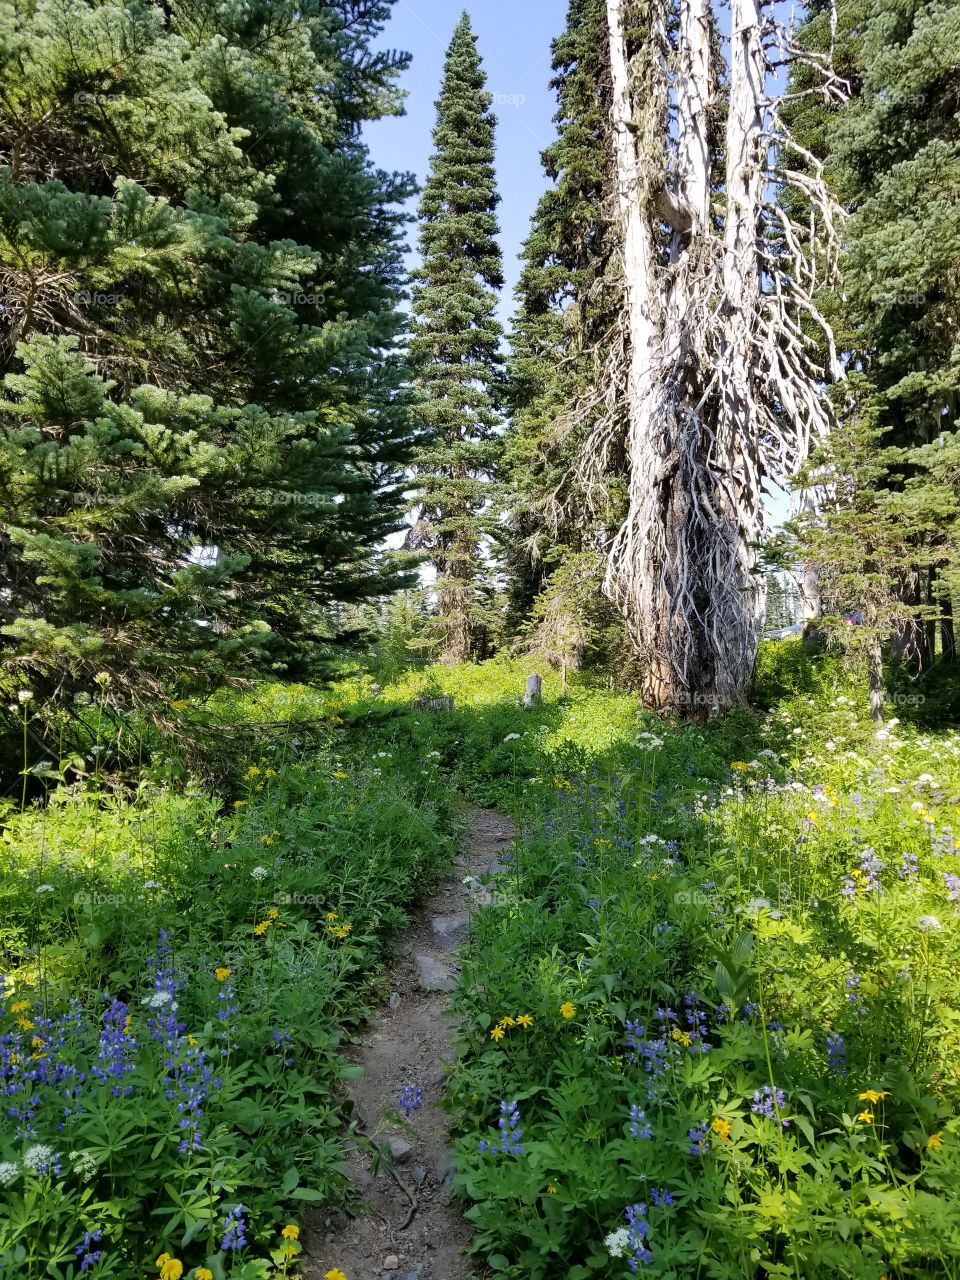 The trail to Rainier